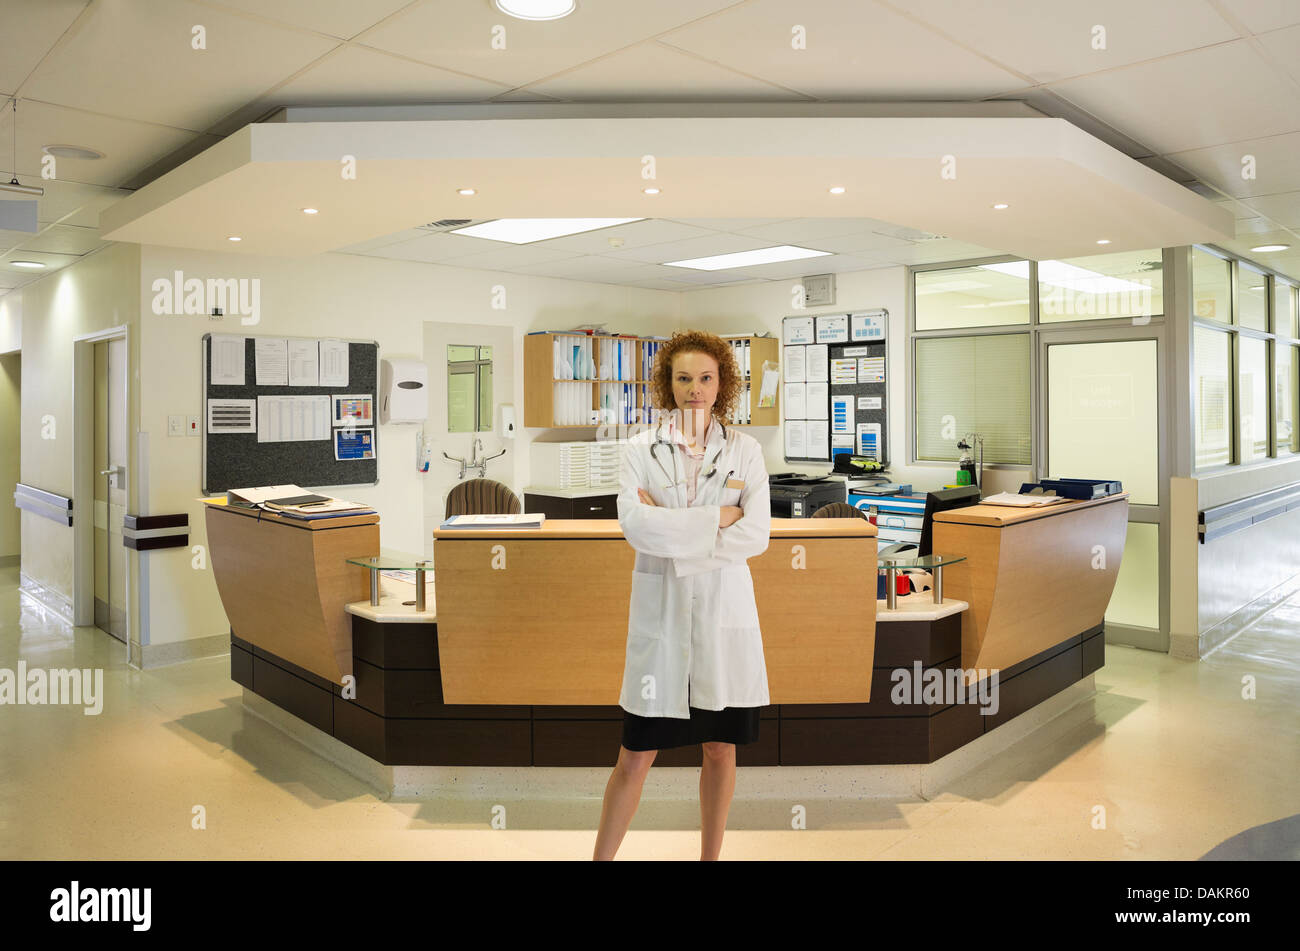 Doctor standing in hospital hallway Stock Photo